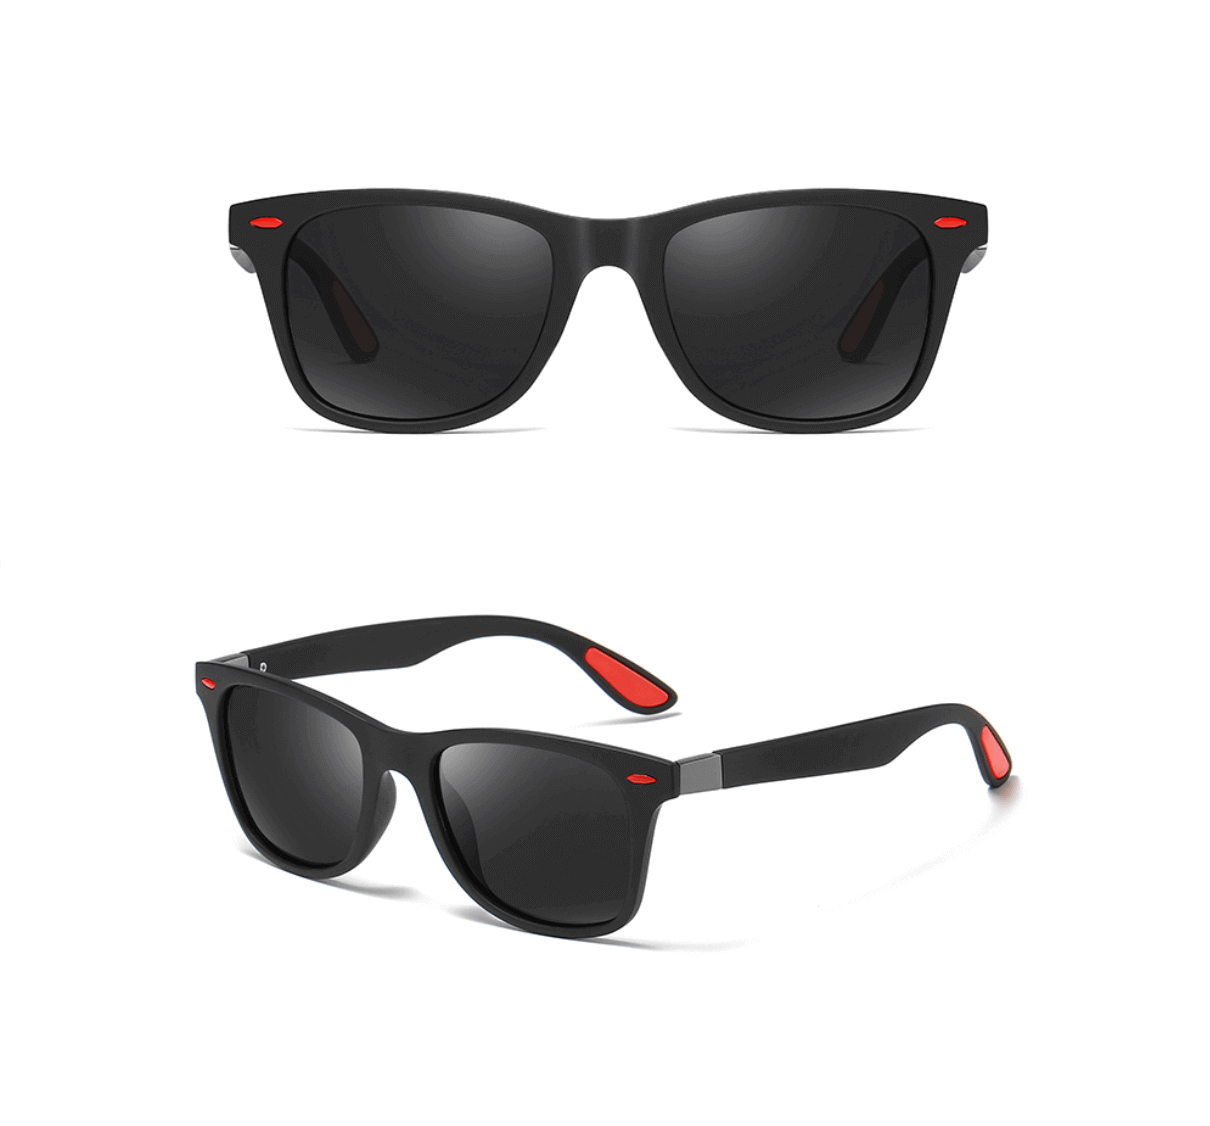 plastic sunglasses wholesale, plastic sunglasses bulk, plastic sunglasses manufacturers, wholesale sunglasses supplier